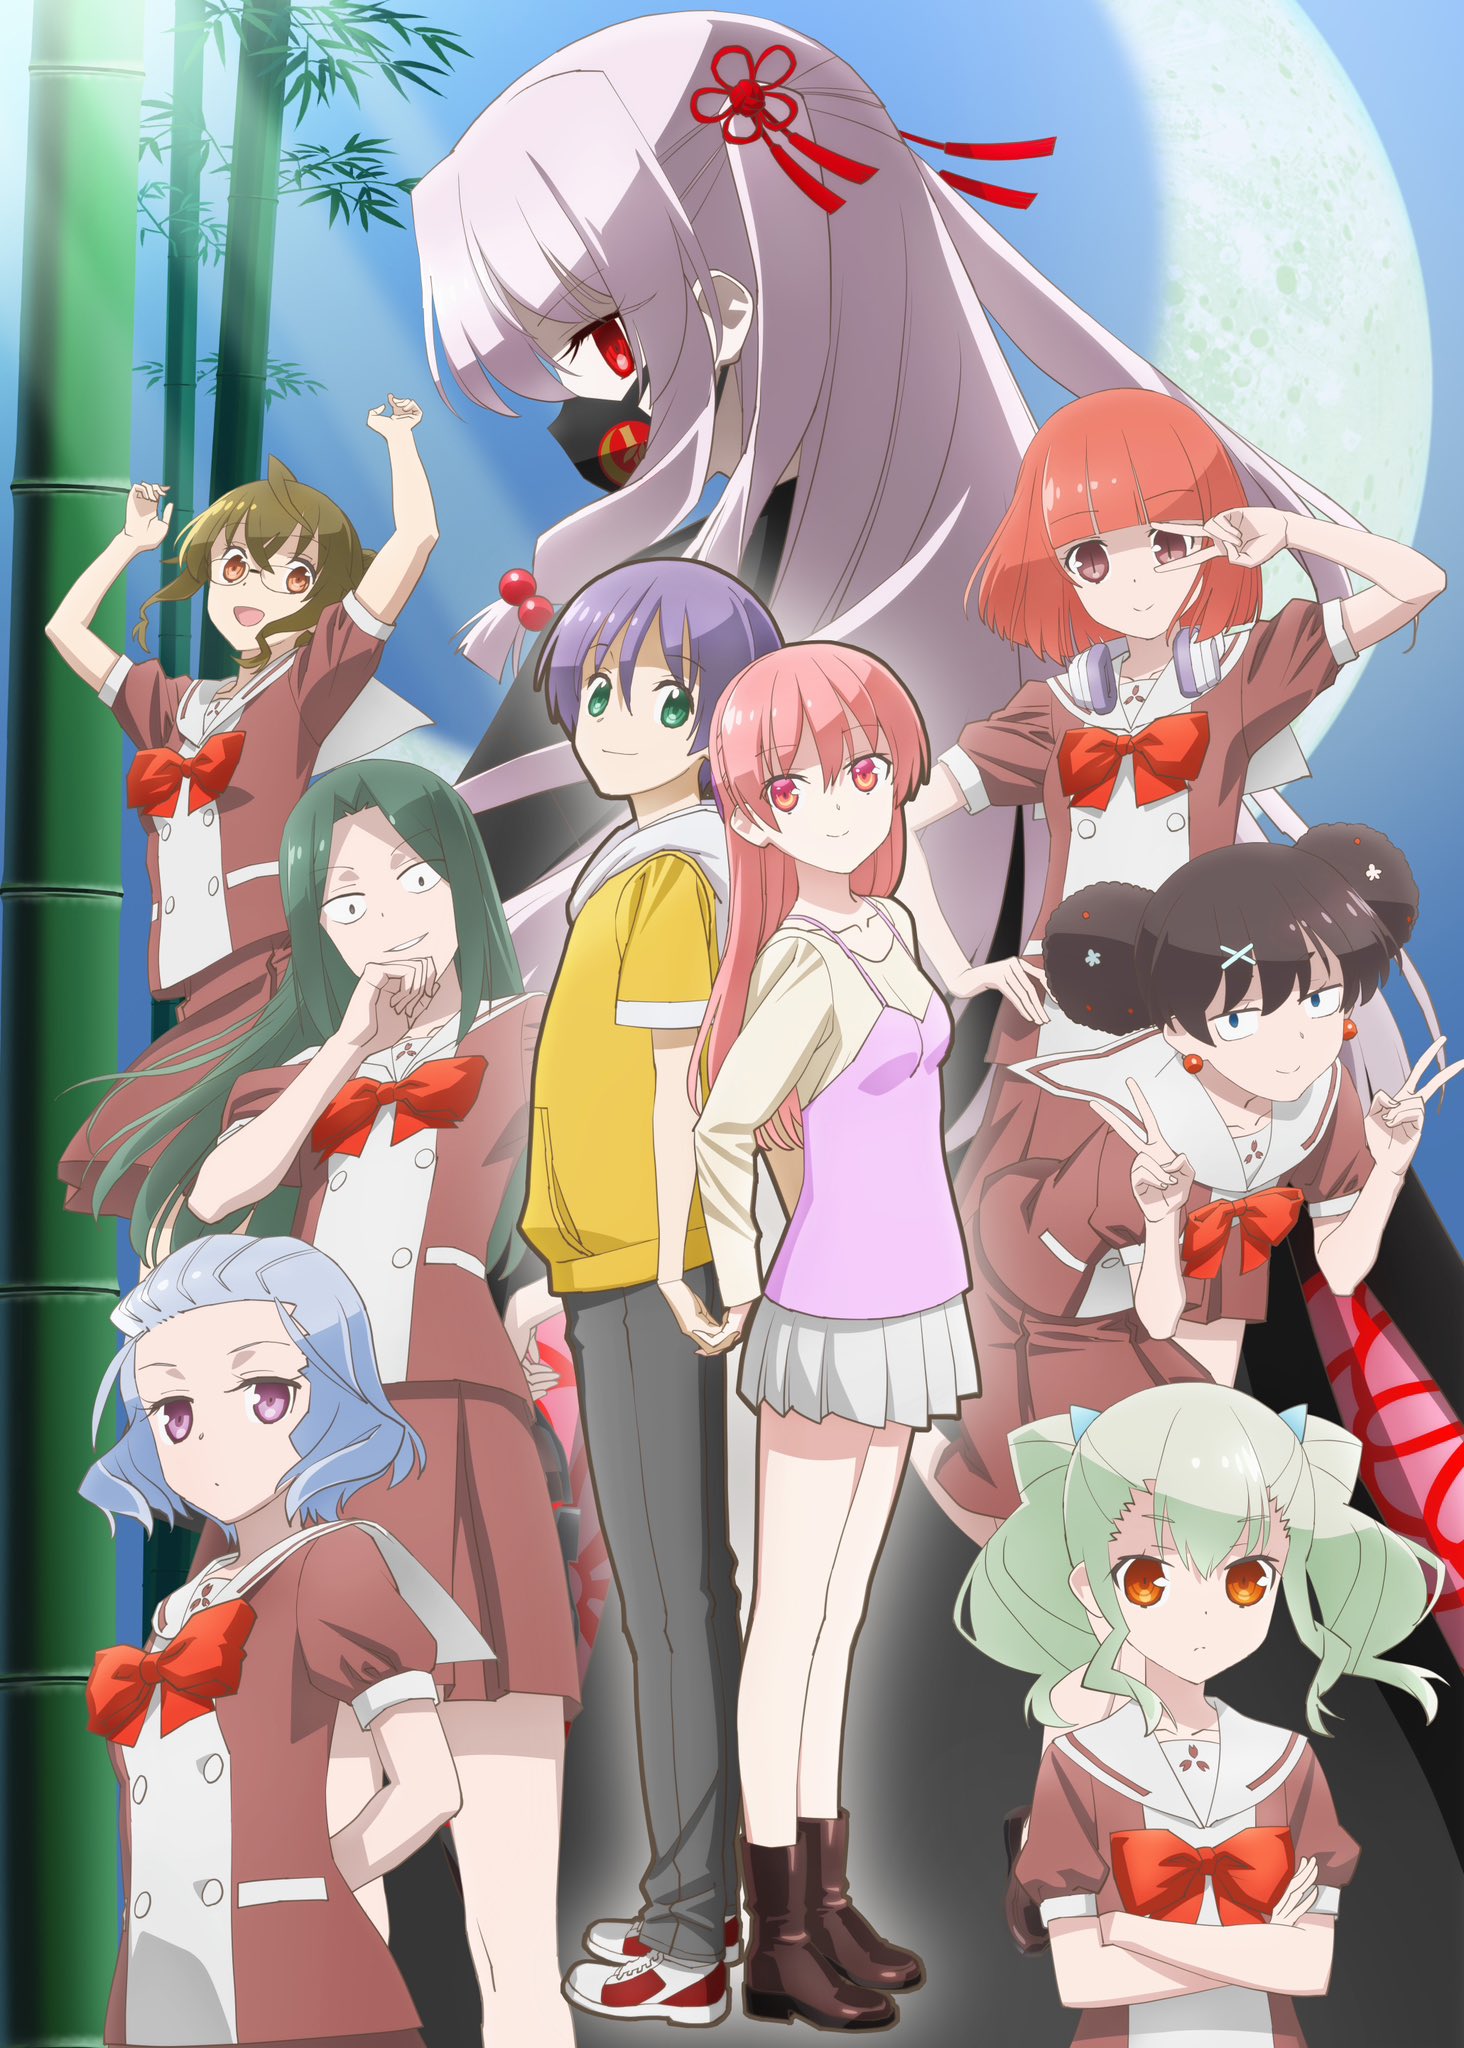 Tonikaku Kawaii terá um novo projeto de anime - Anime United